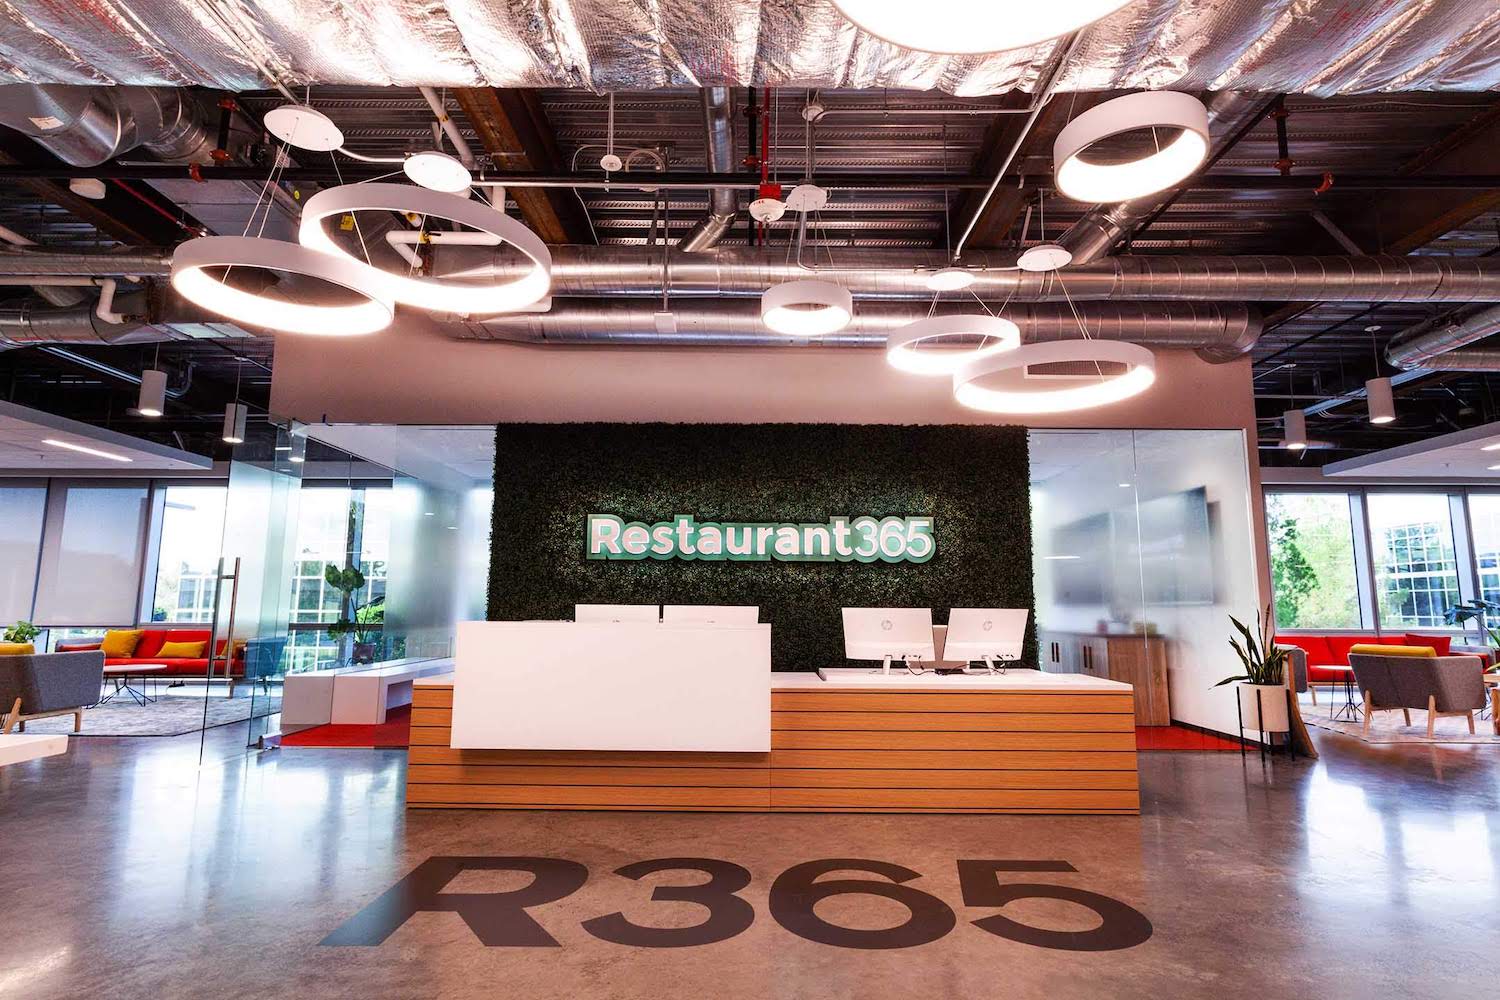 Restaurant 365 HQ